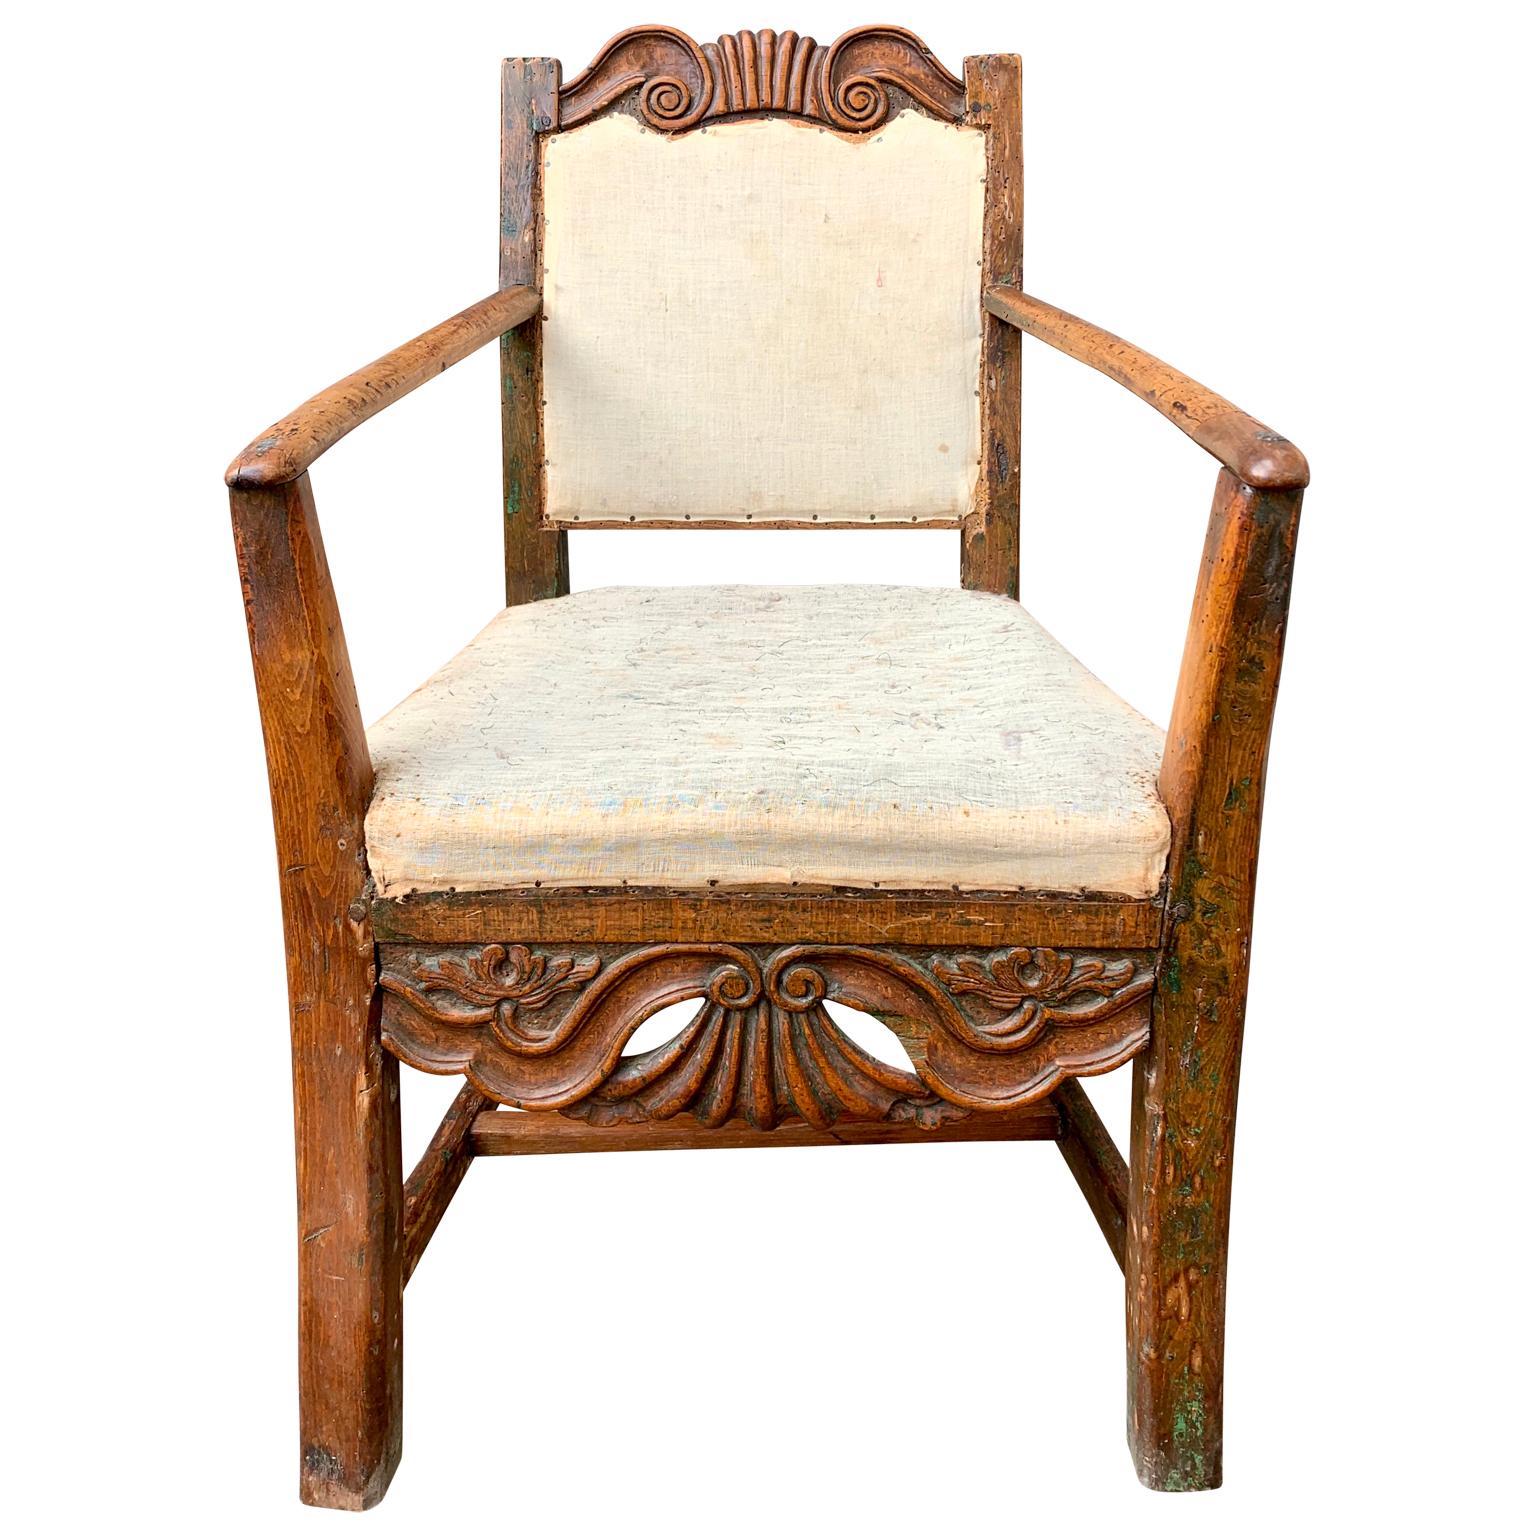 An 18th century Rococo Folk Art armchair from the typical main Swedish folk art category furniture

 